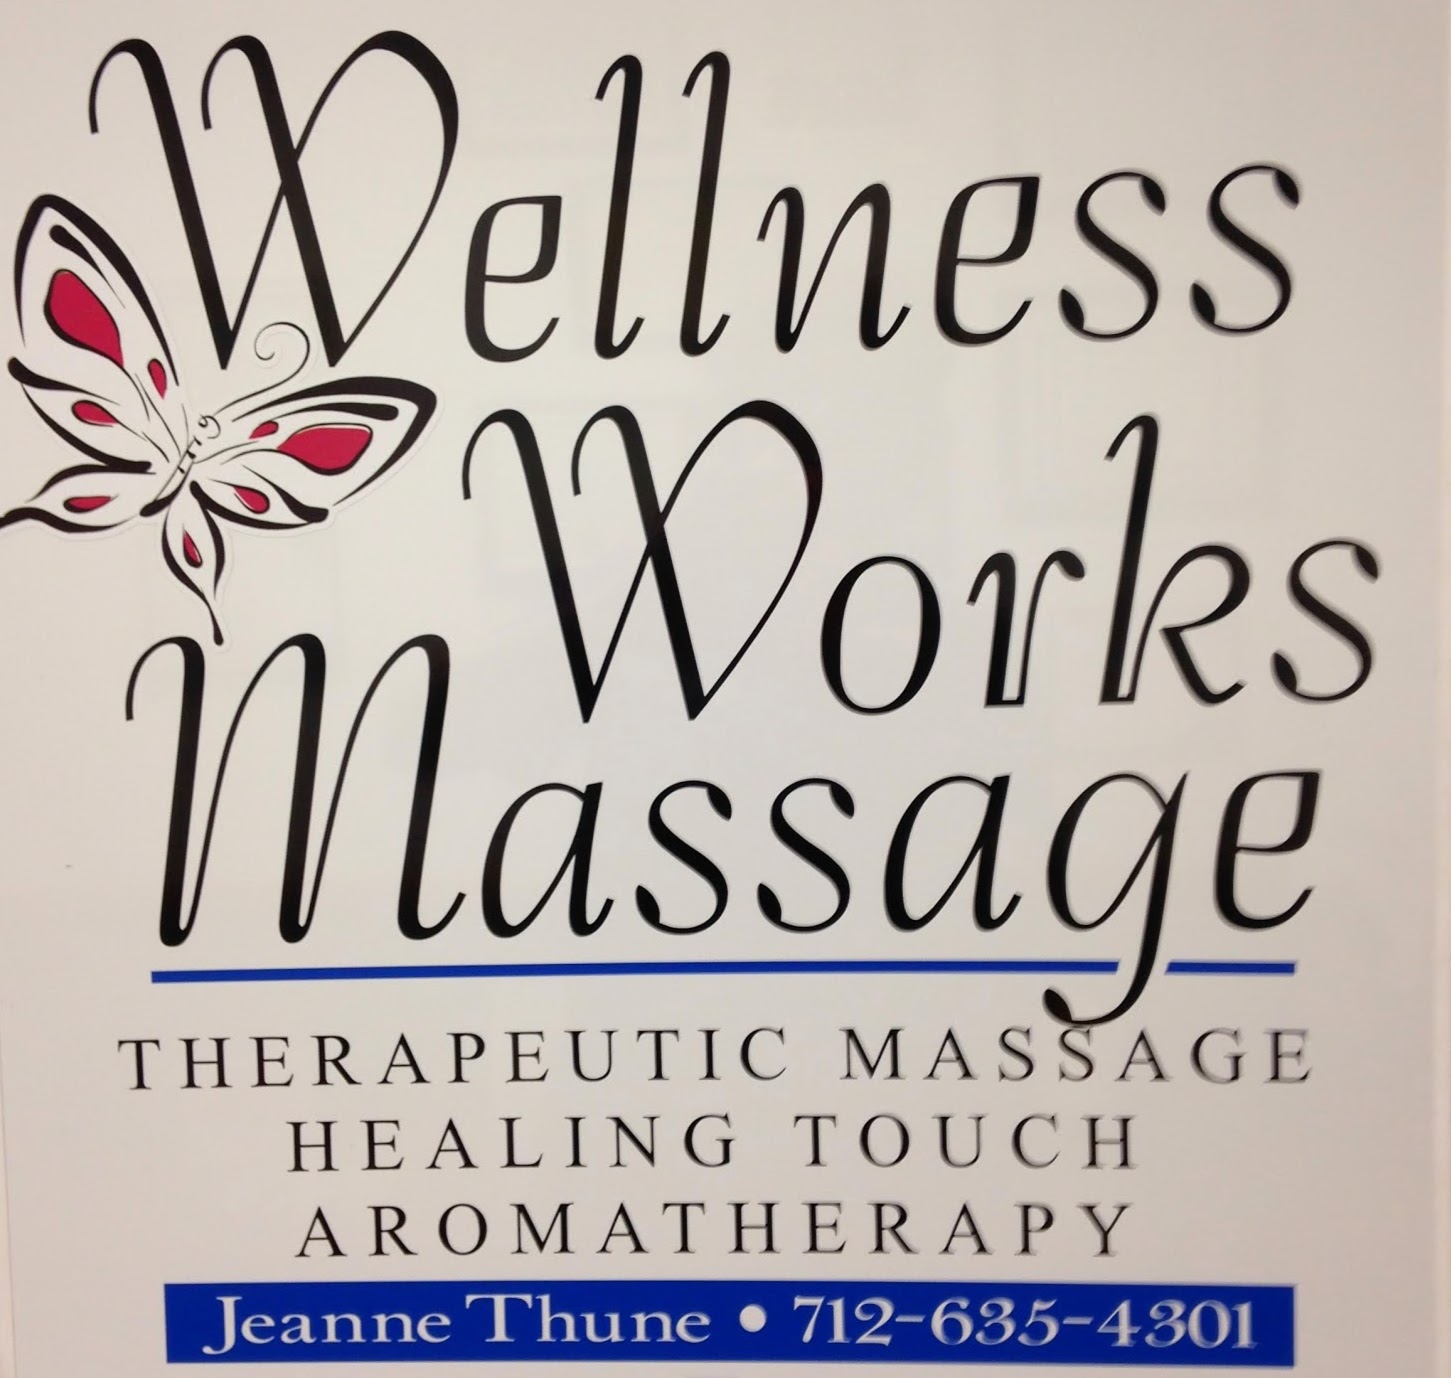 Wellness Works Massage